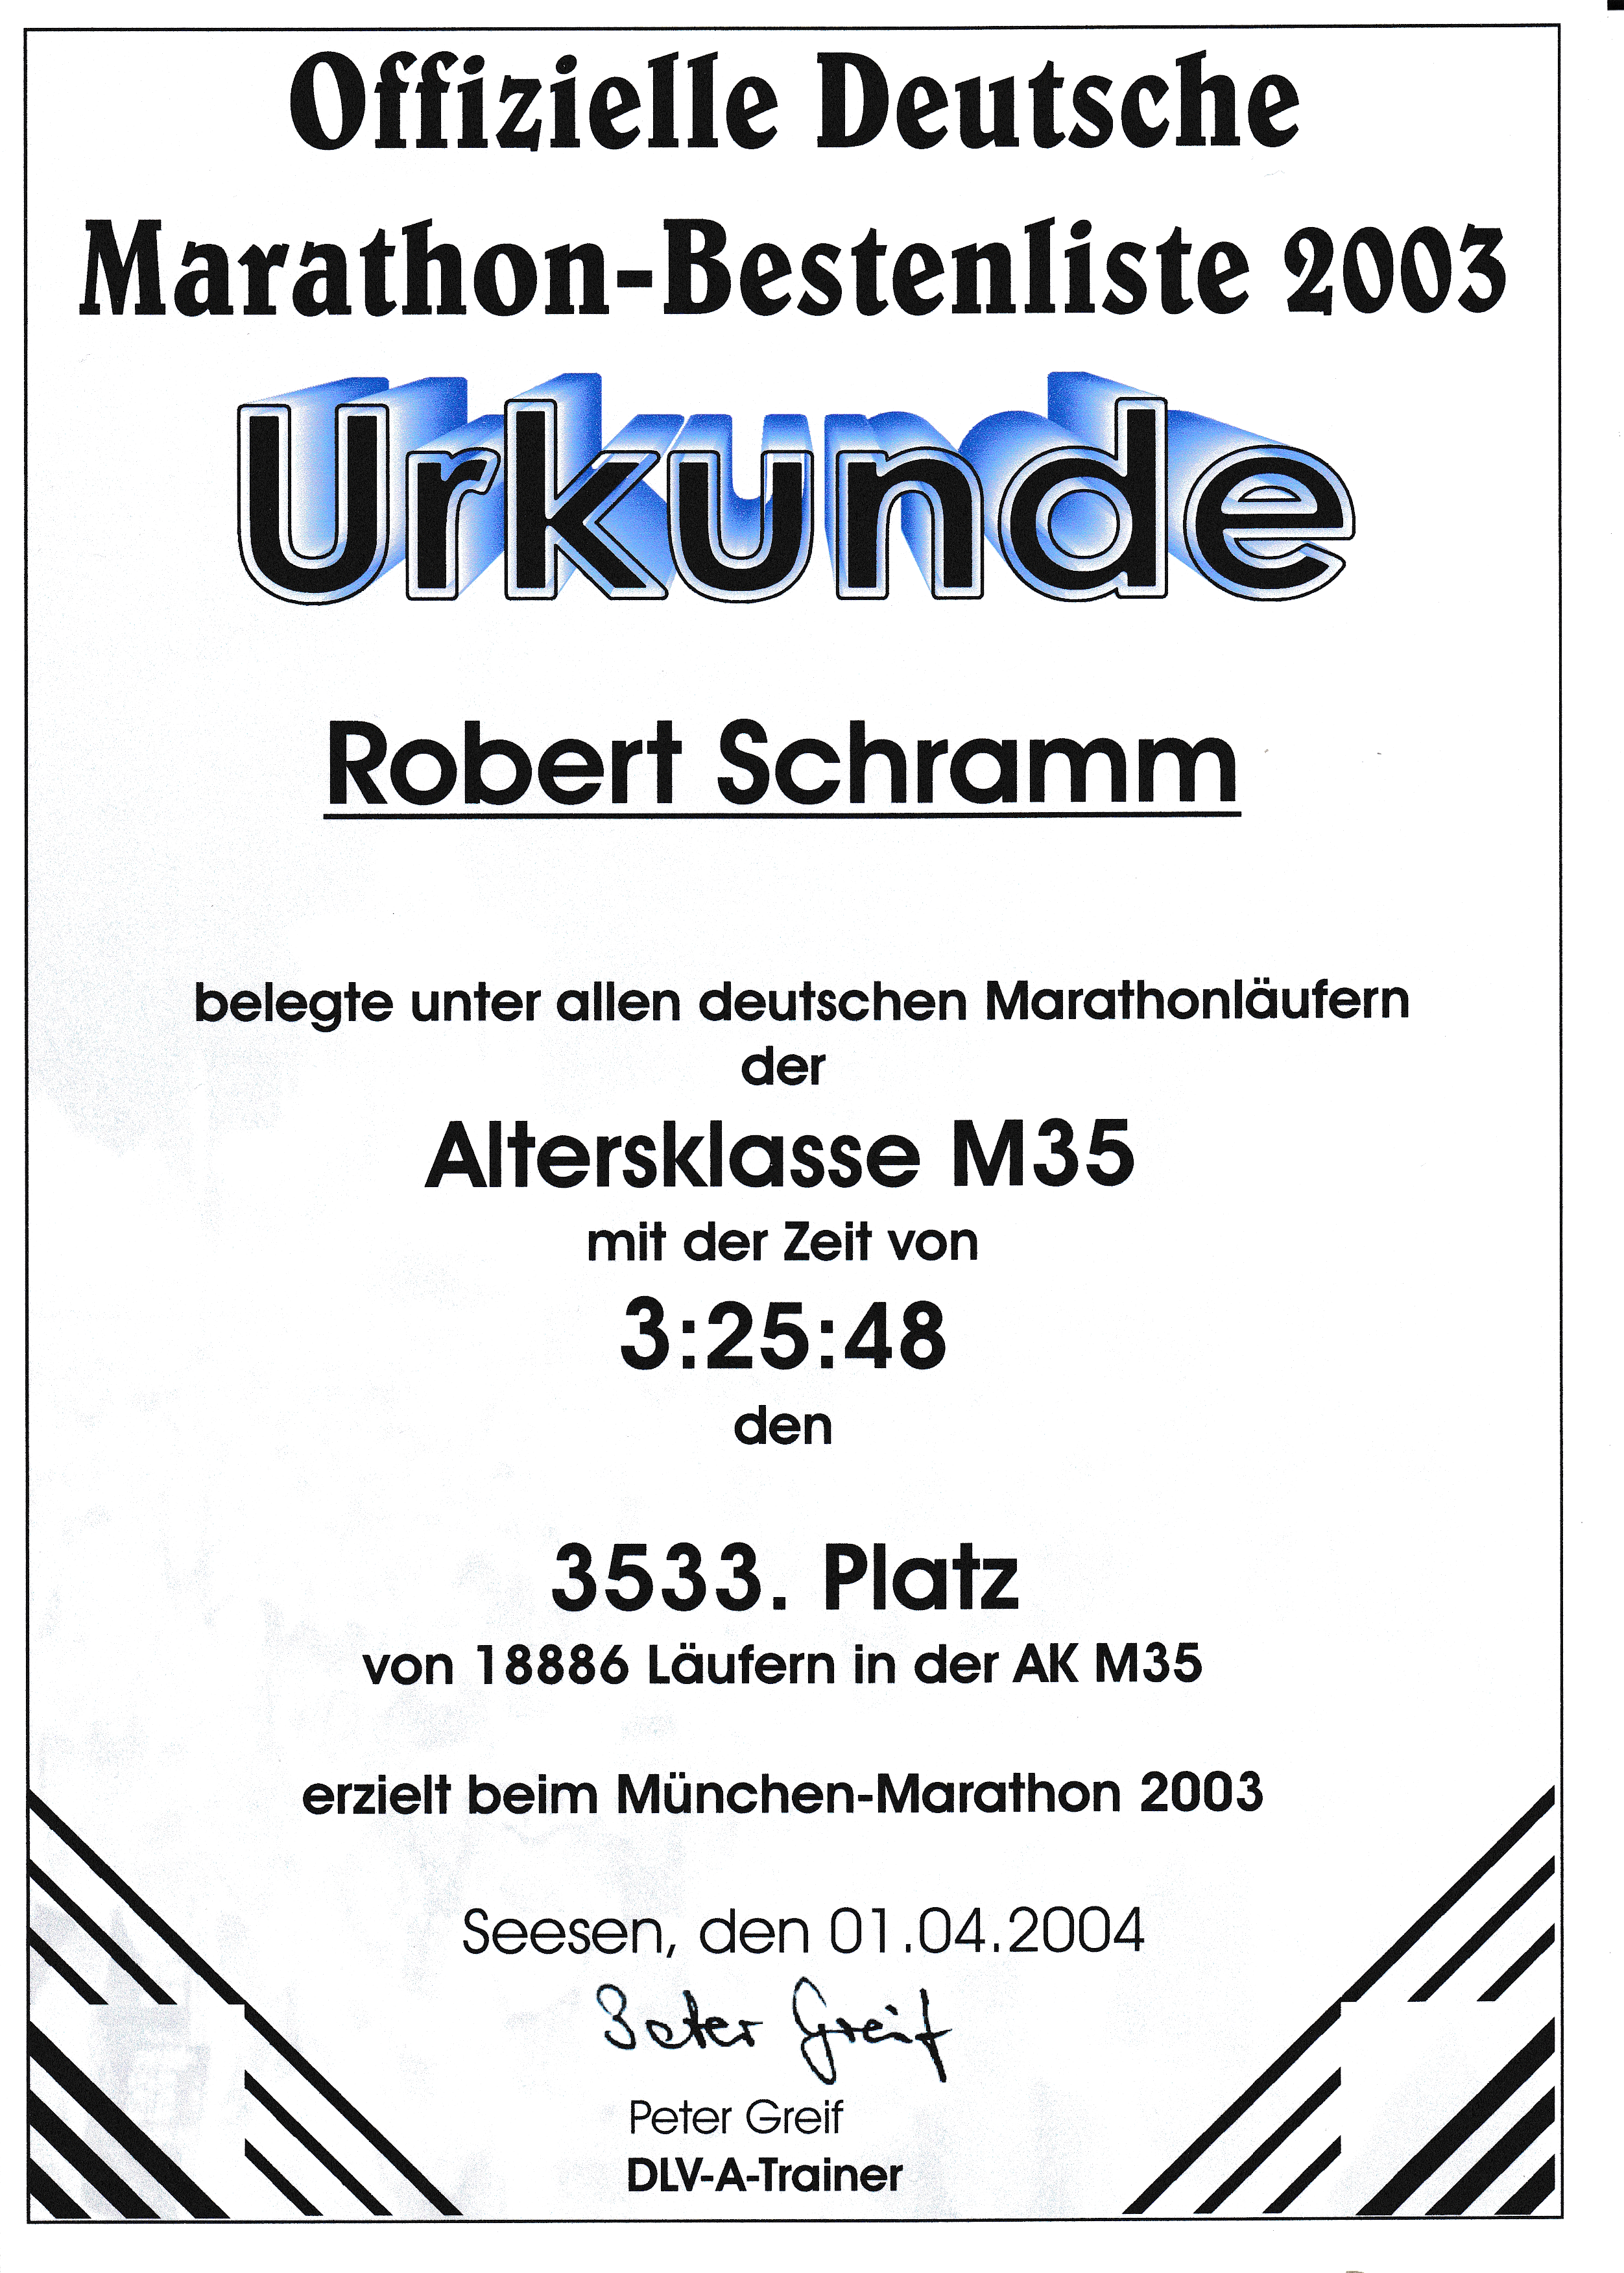 Urkunde-Bestenliste-2003